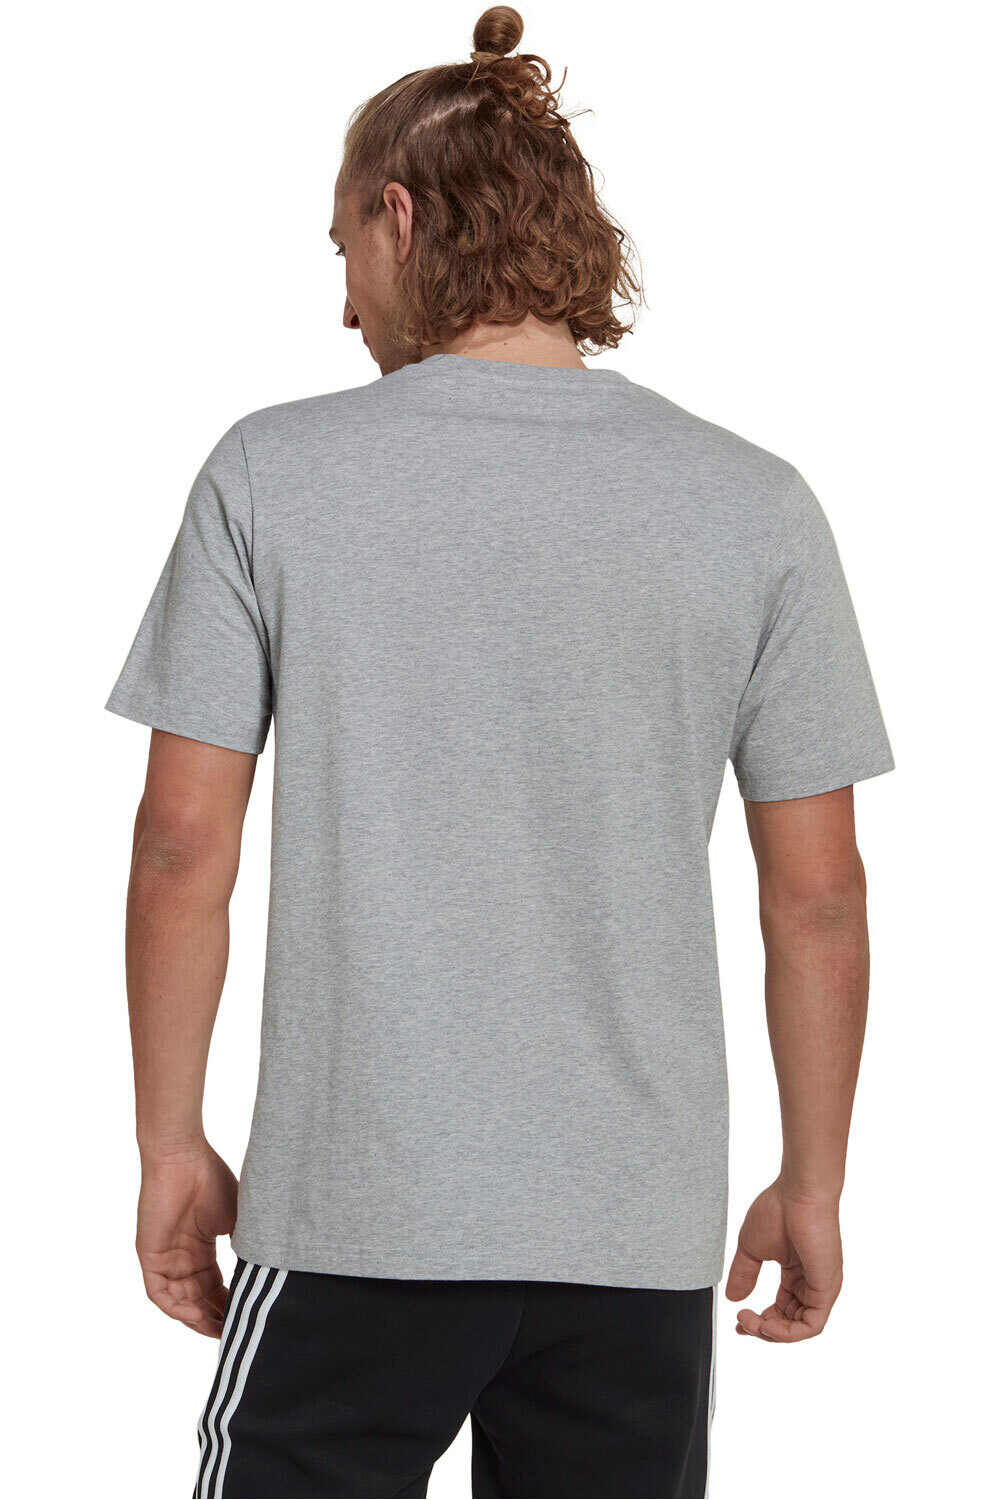 adidas camiseta manga corta hombre Essentials Camo Print vista trasera